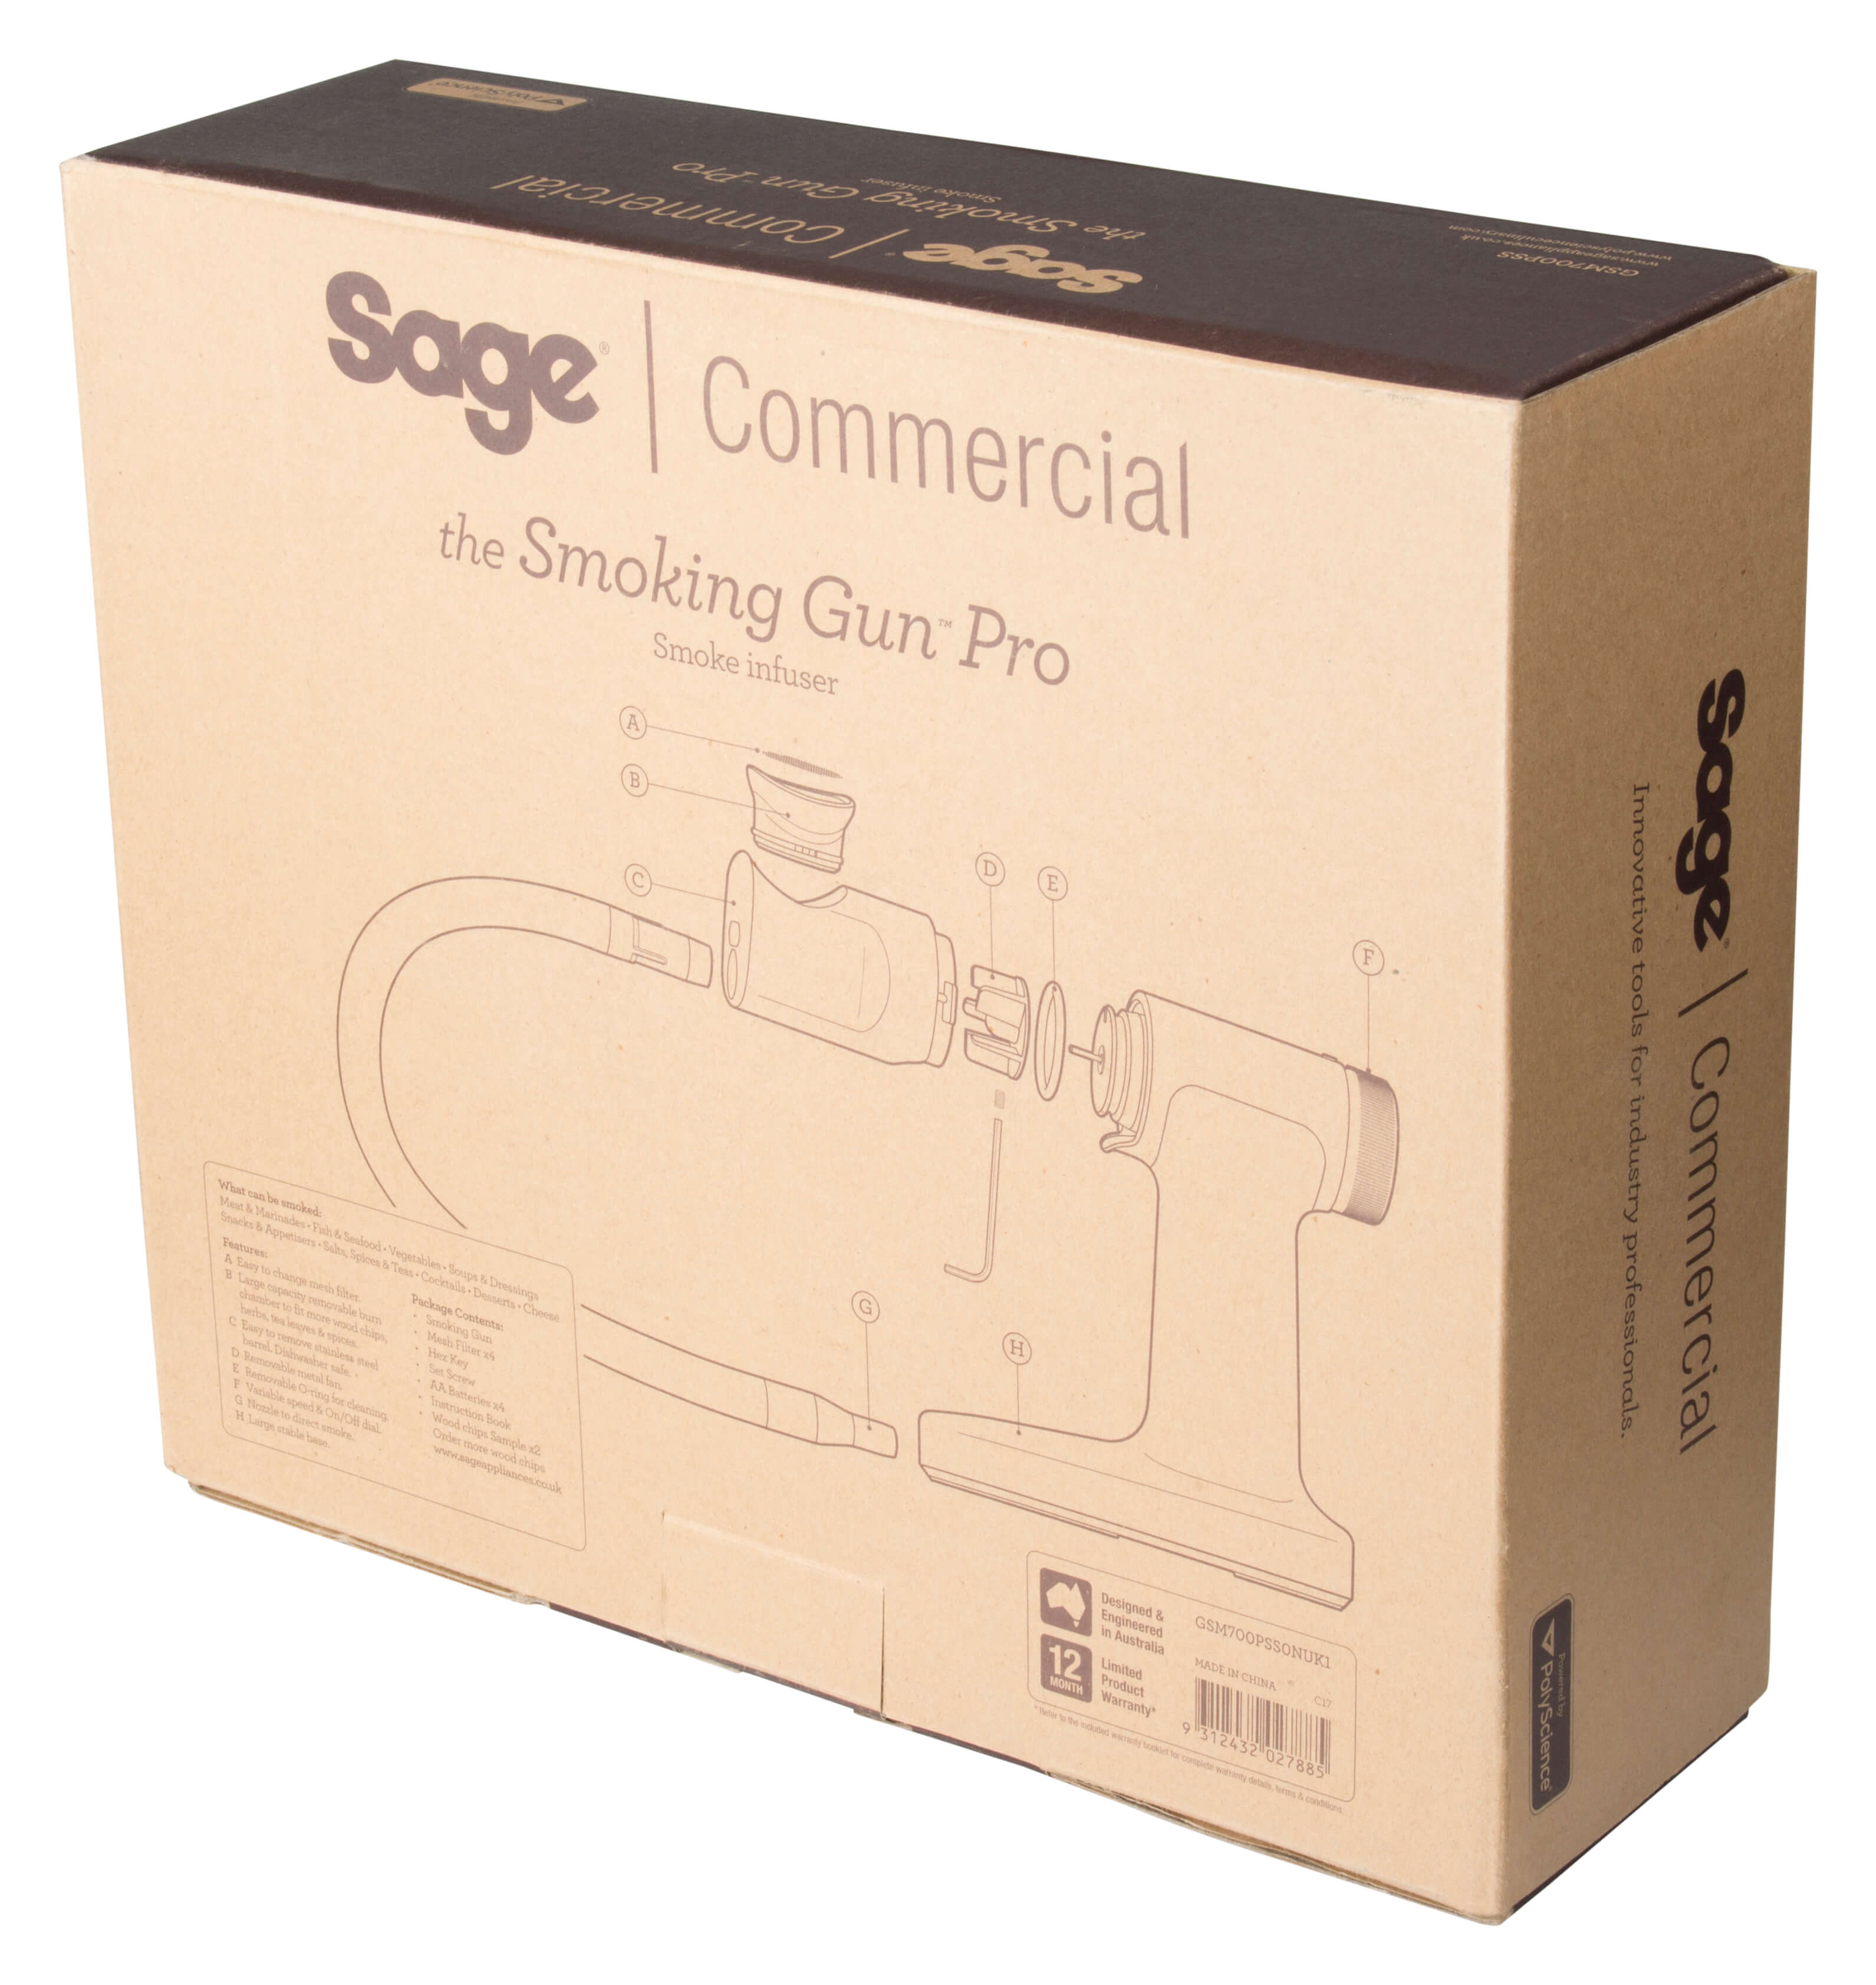 Räuchergerät The Smoking Gun Pro™ - Sage Commercial